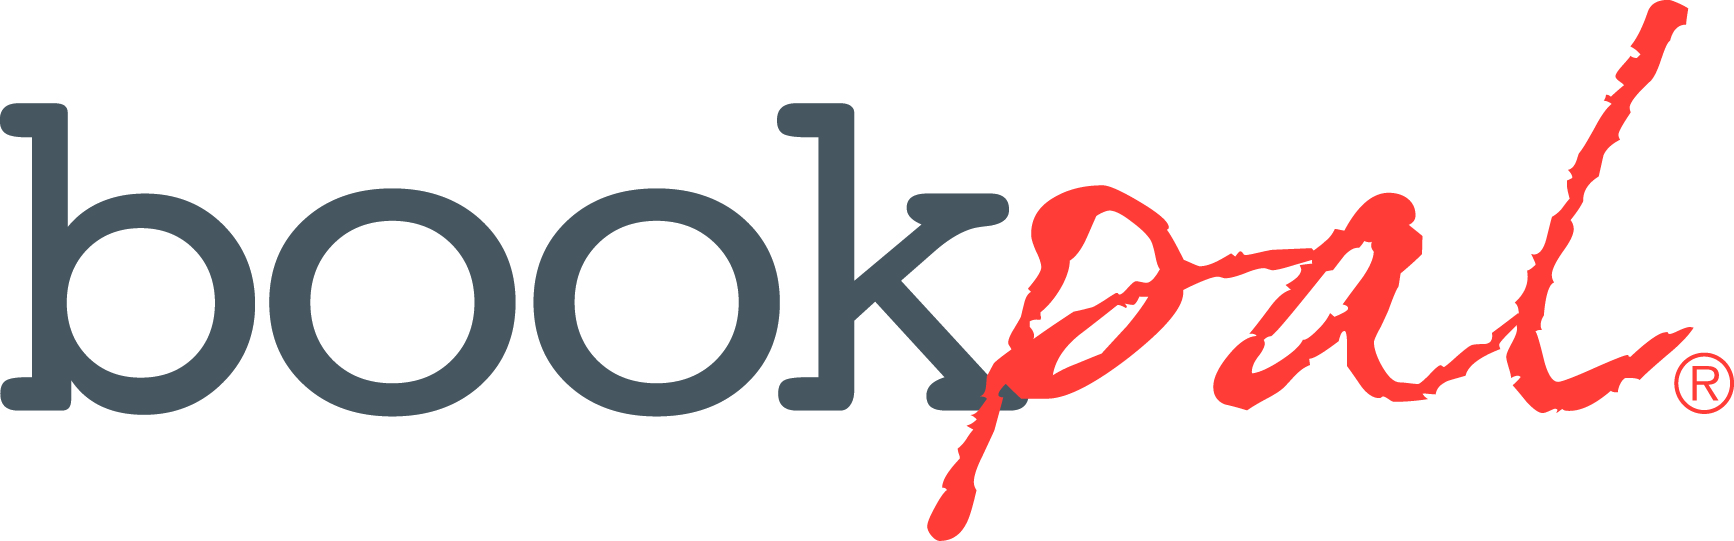 BookPal_logo